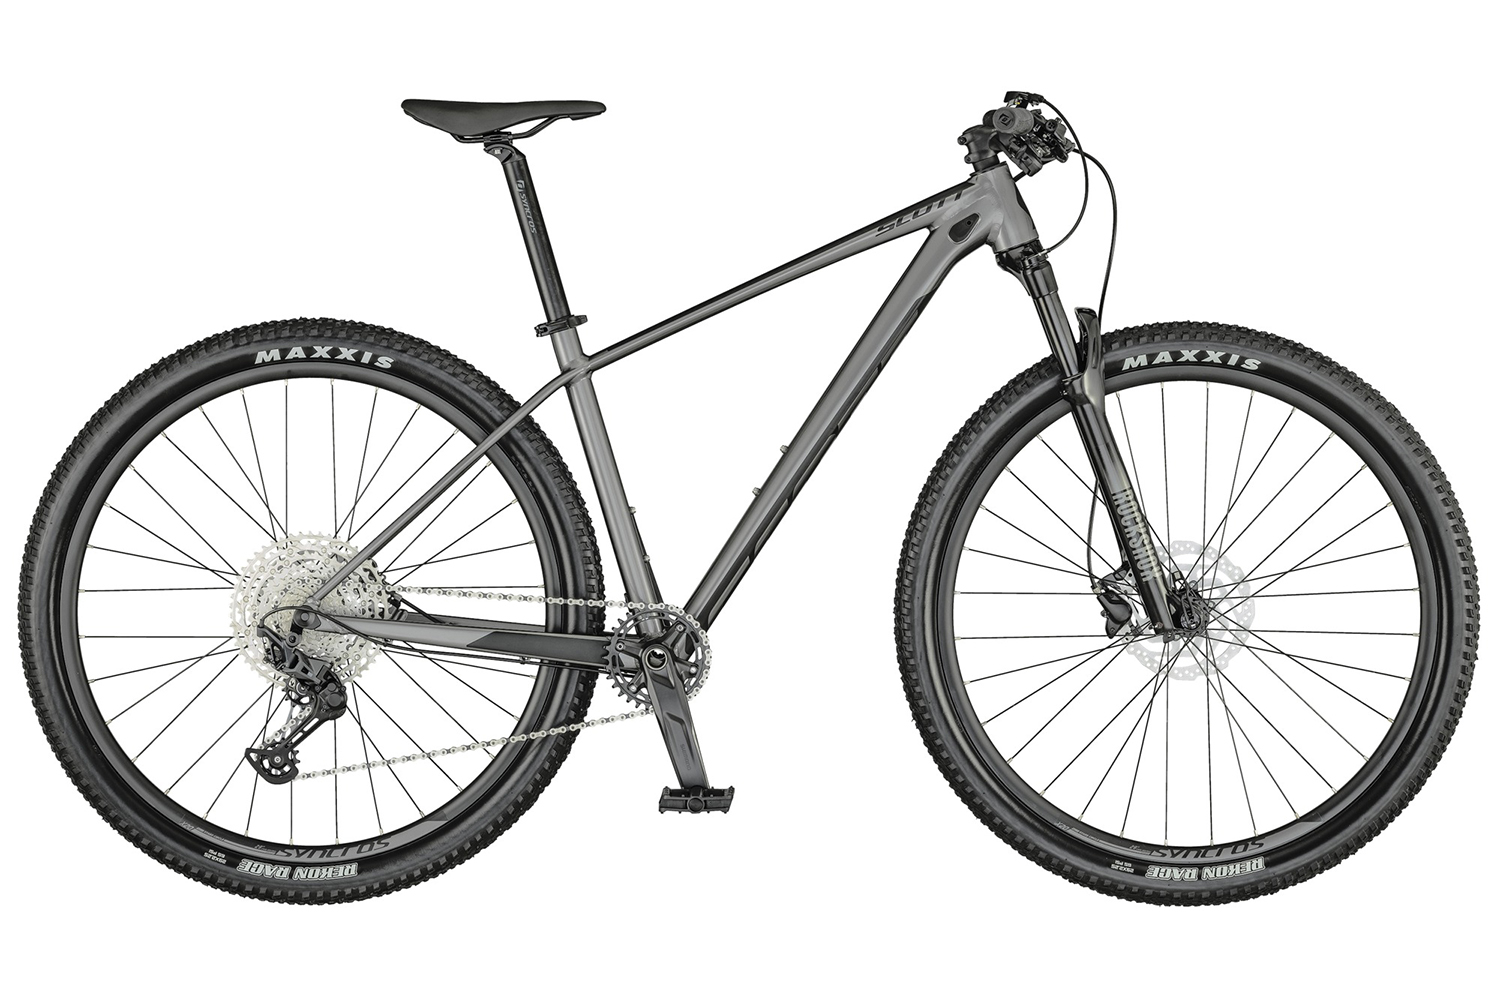  Отзывы о Горном велосипеде Scott Scale 965 (2021) 2021